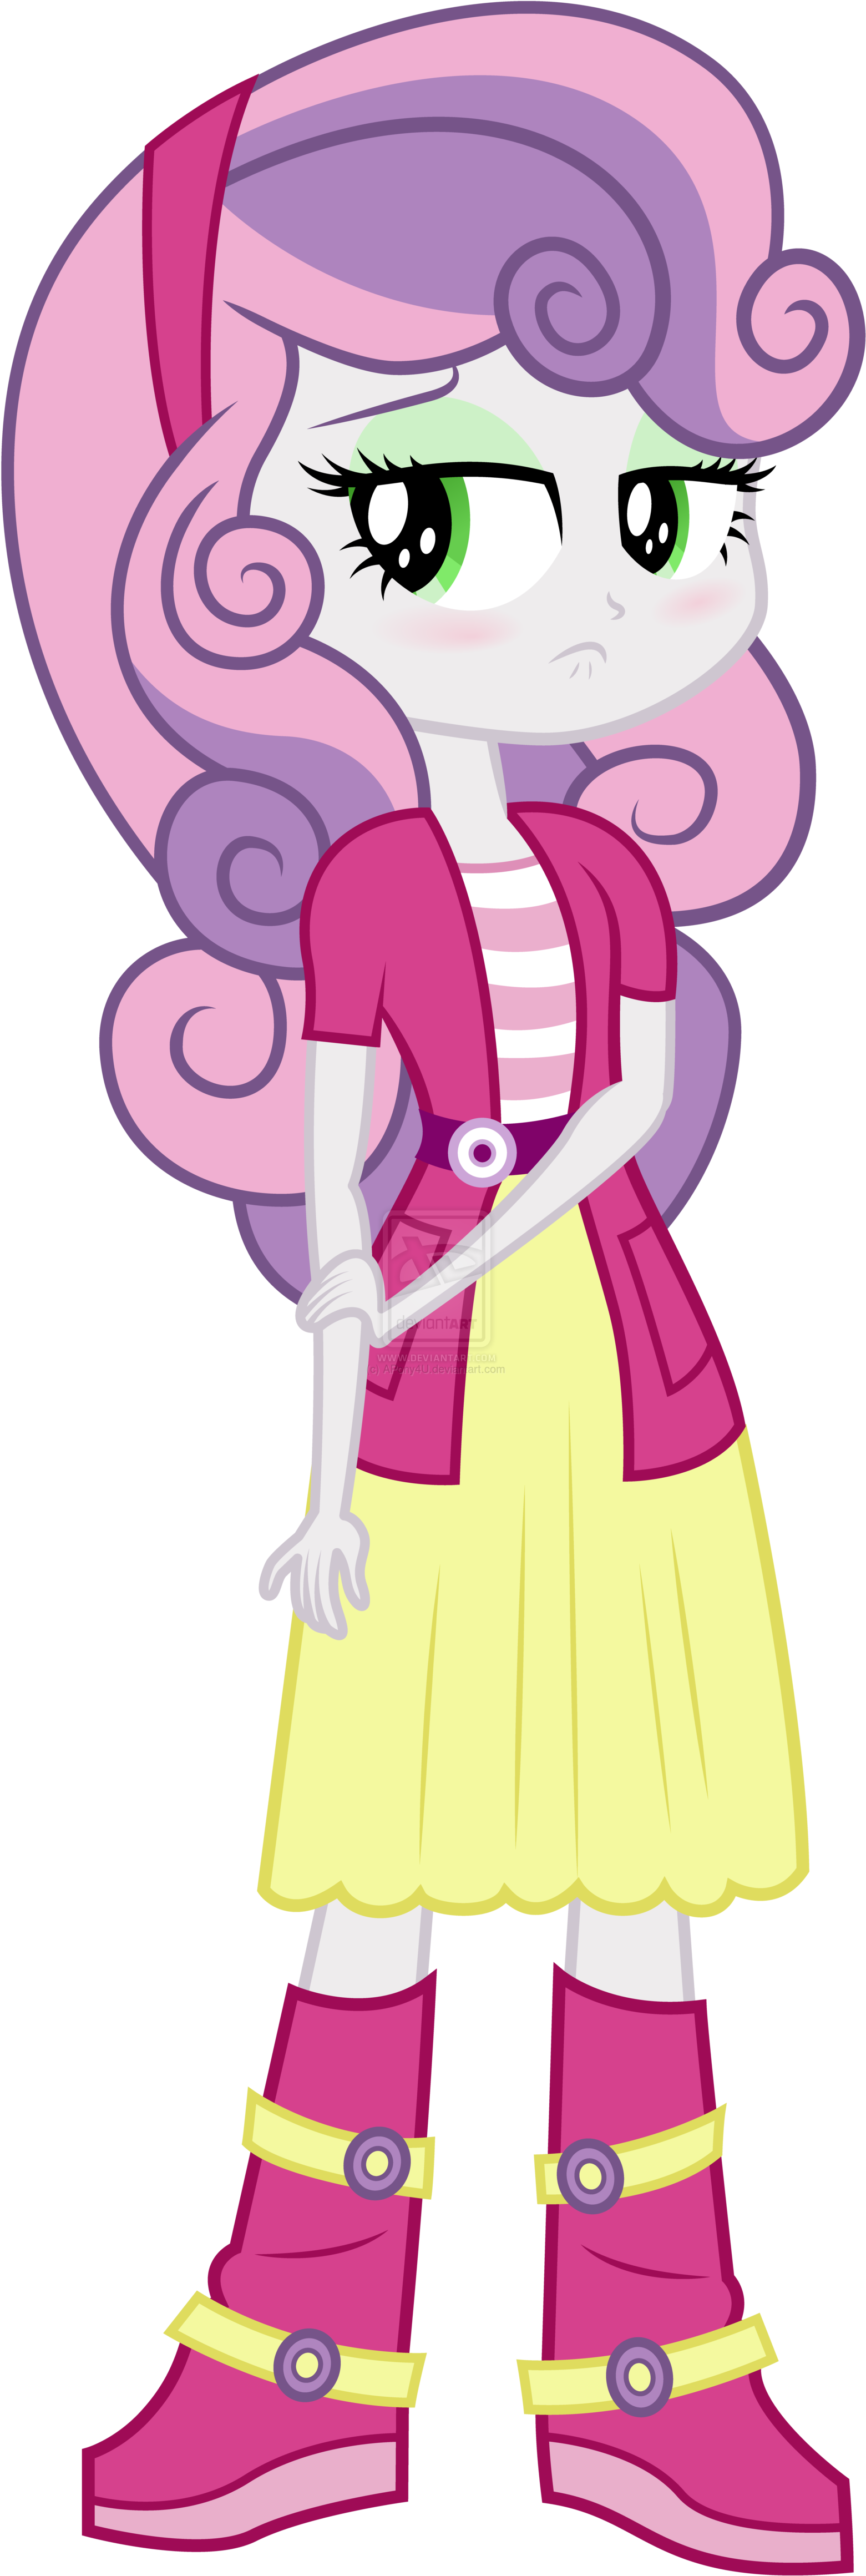 Sweetie Belle My Little Pony - Sweetie Belle Equestria Girl (1600x4683)